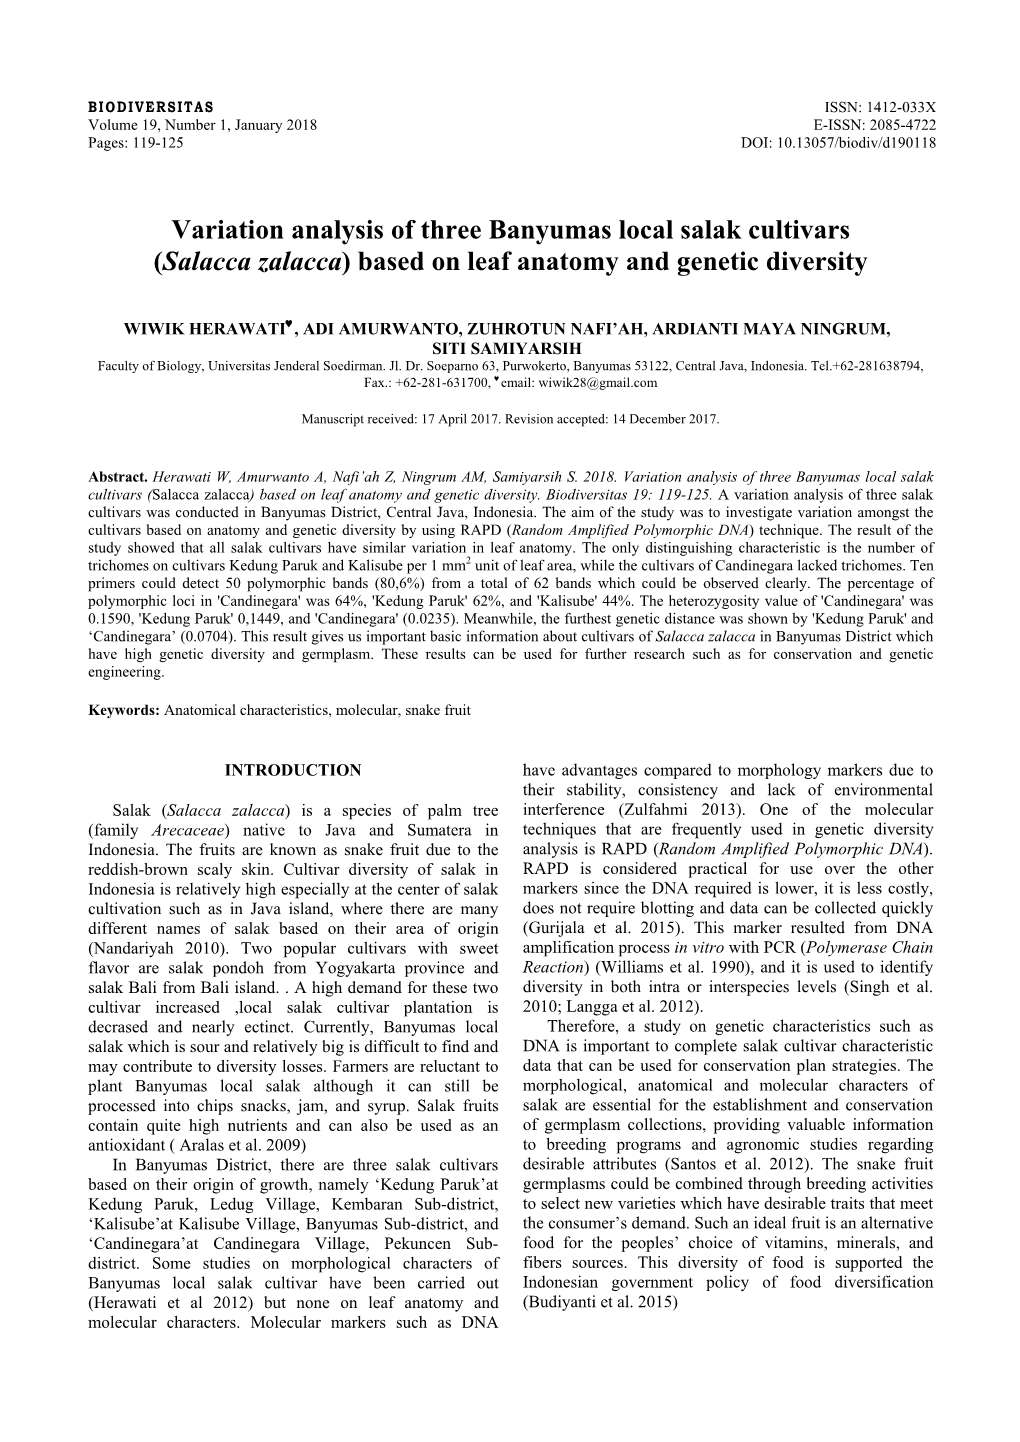 Variation Analysis of Three Banyumas Local Salak Cultivars (Salacca Zalacca) Based on Leaf Anatomy and Genetic Diversity